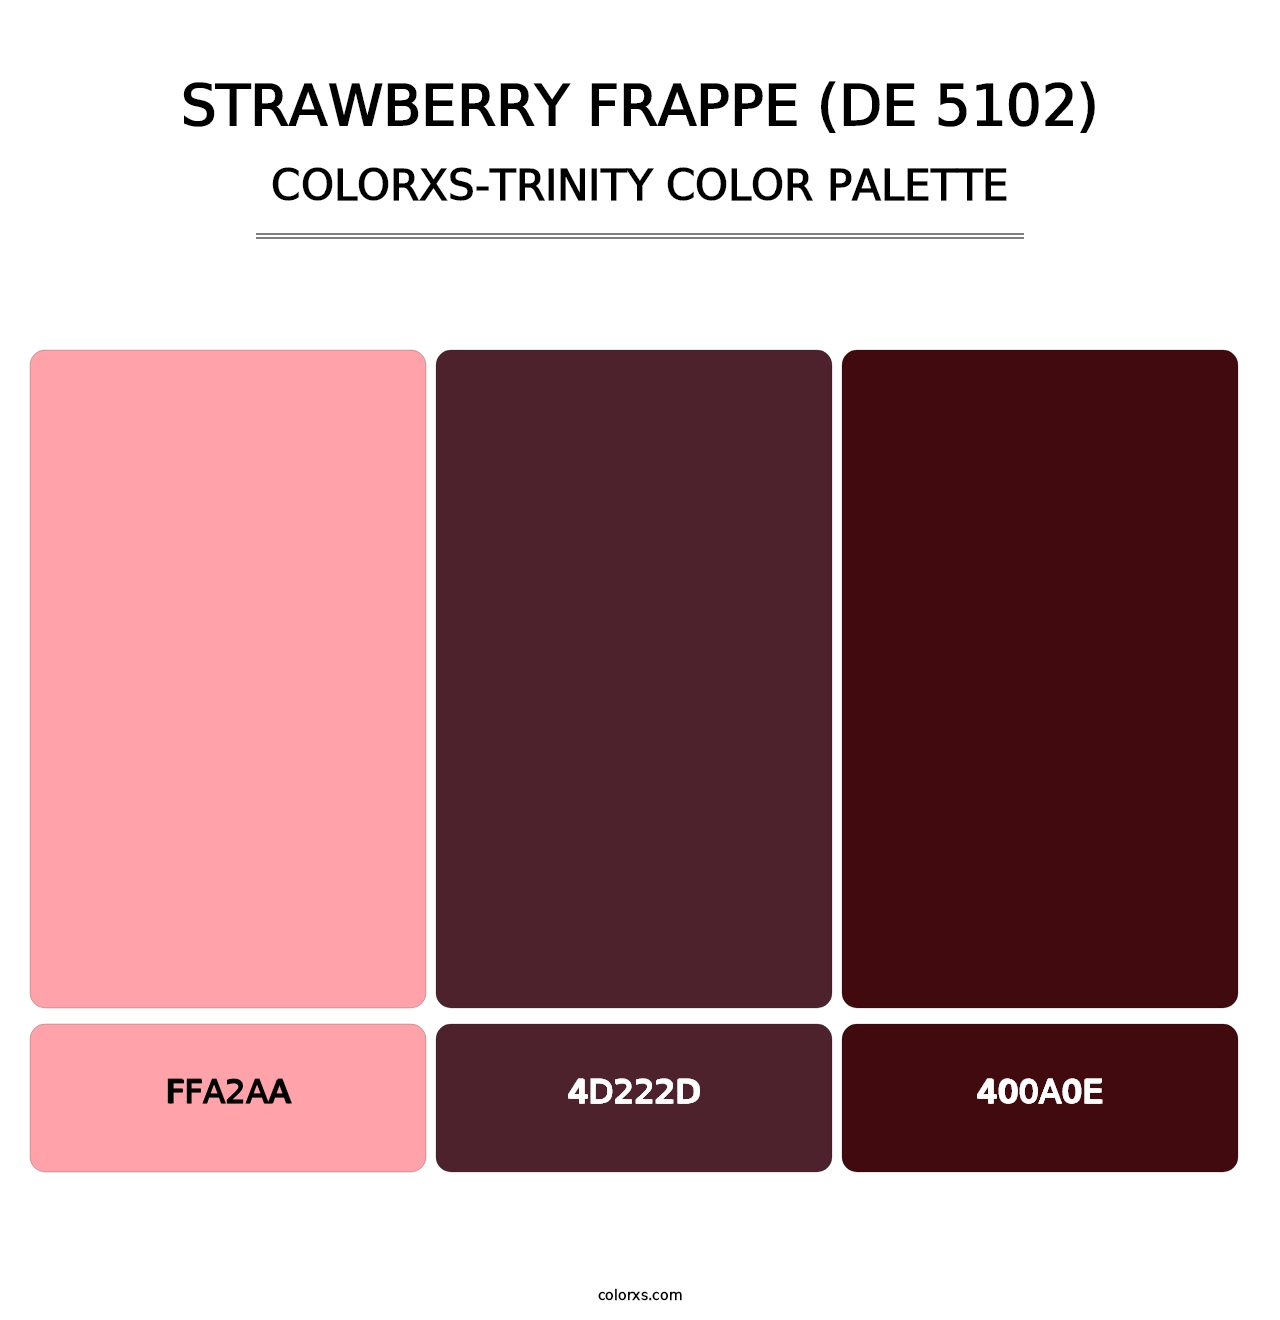 Strawberry Frappe (DE 5102) - Colorxs Trinity Palette